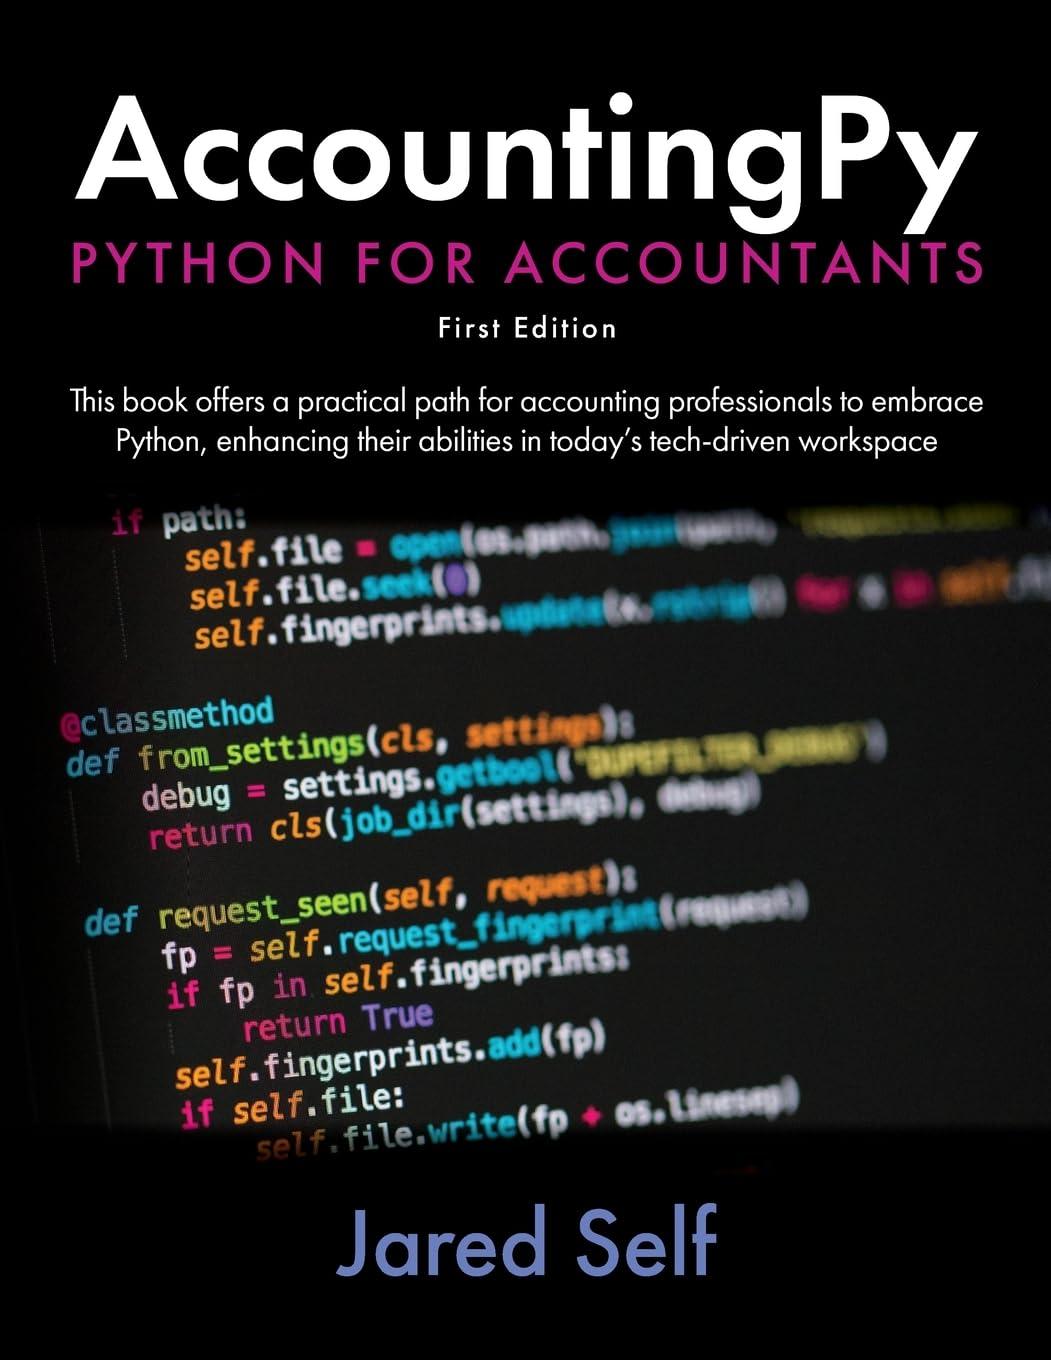 accountingpy python for accountants 1st edition jared self b0cgl1b863, 979-8988991793